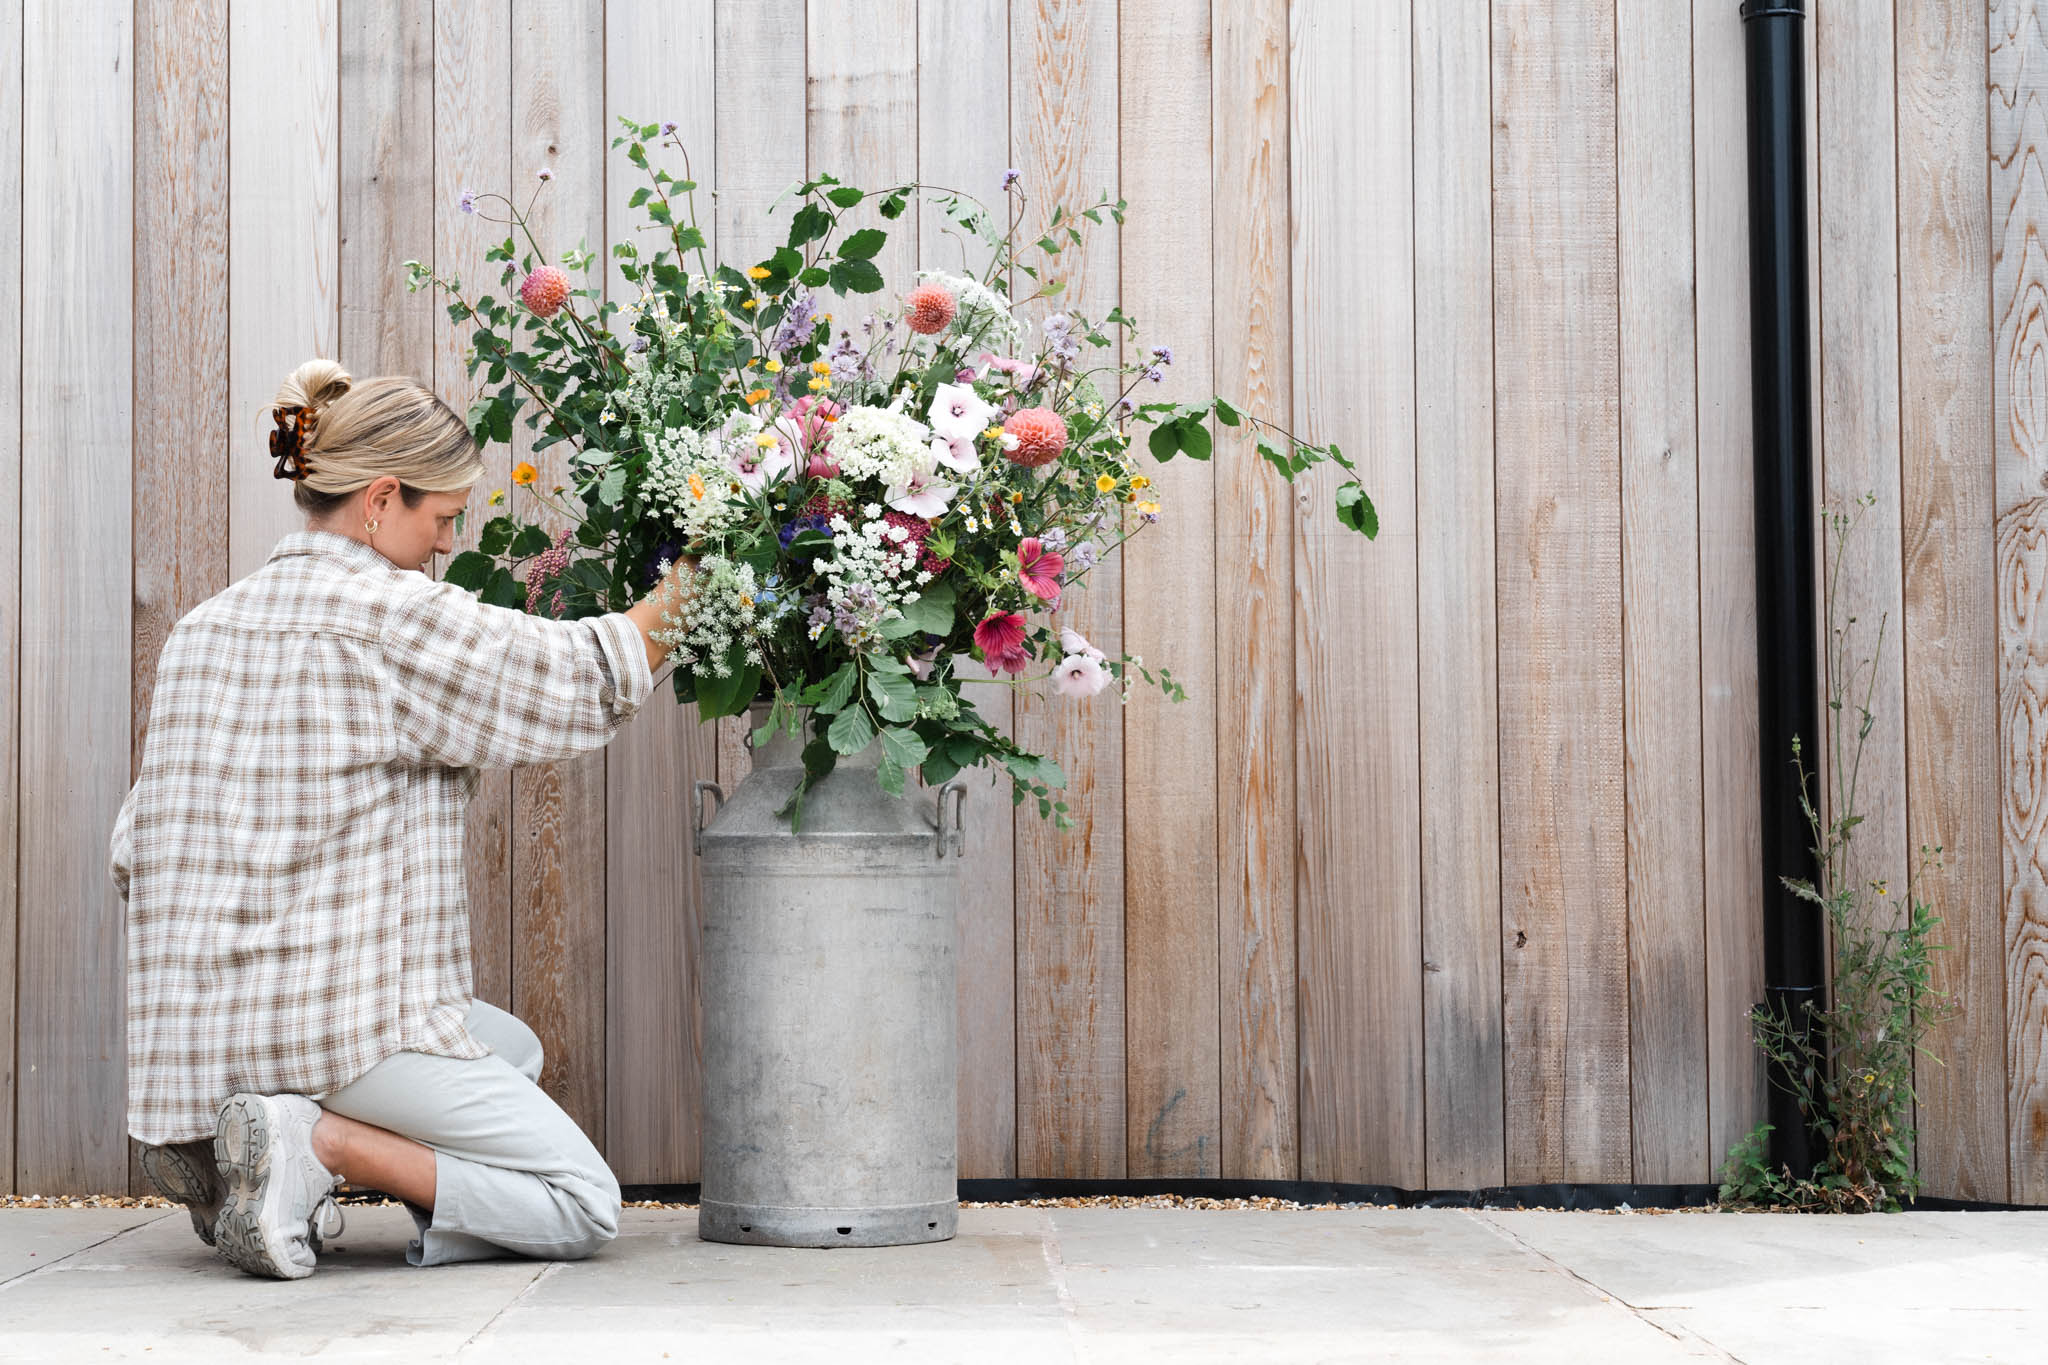 Bryonia, UK wedding florist using seasonal British flowers